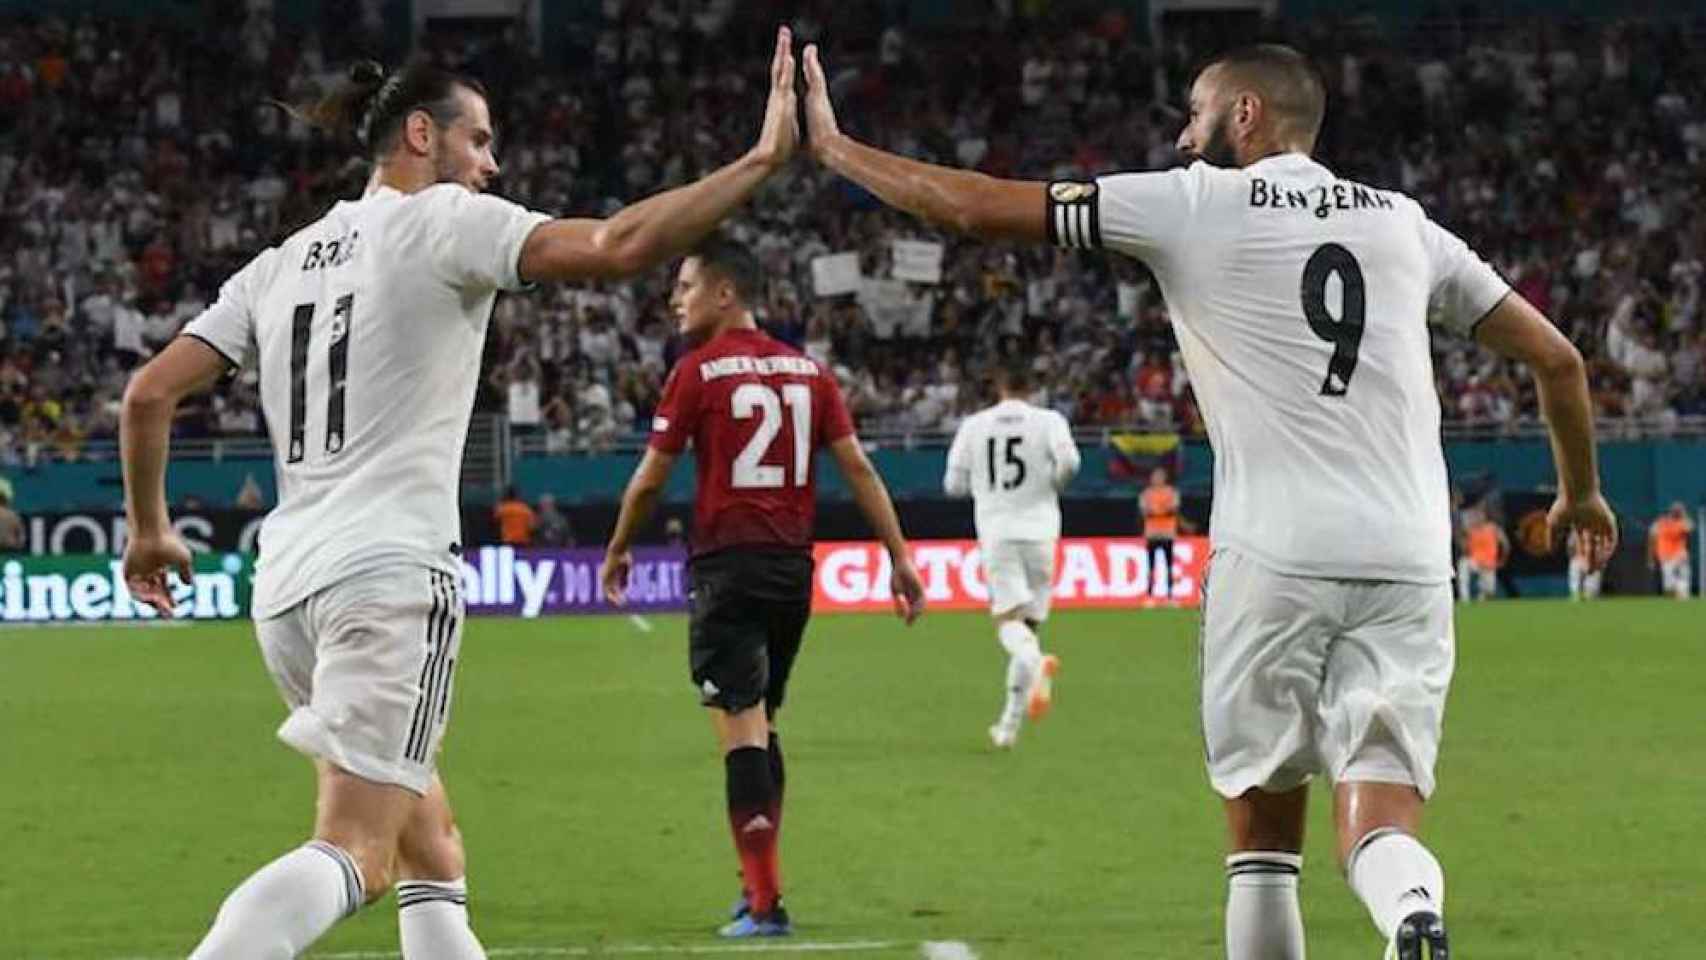 Una foto de Gareth Bale y Karim Benzema celebrando un gol Florentino / Twitter